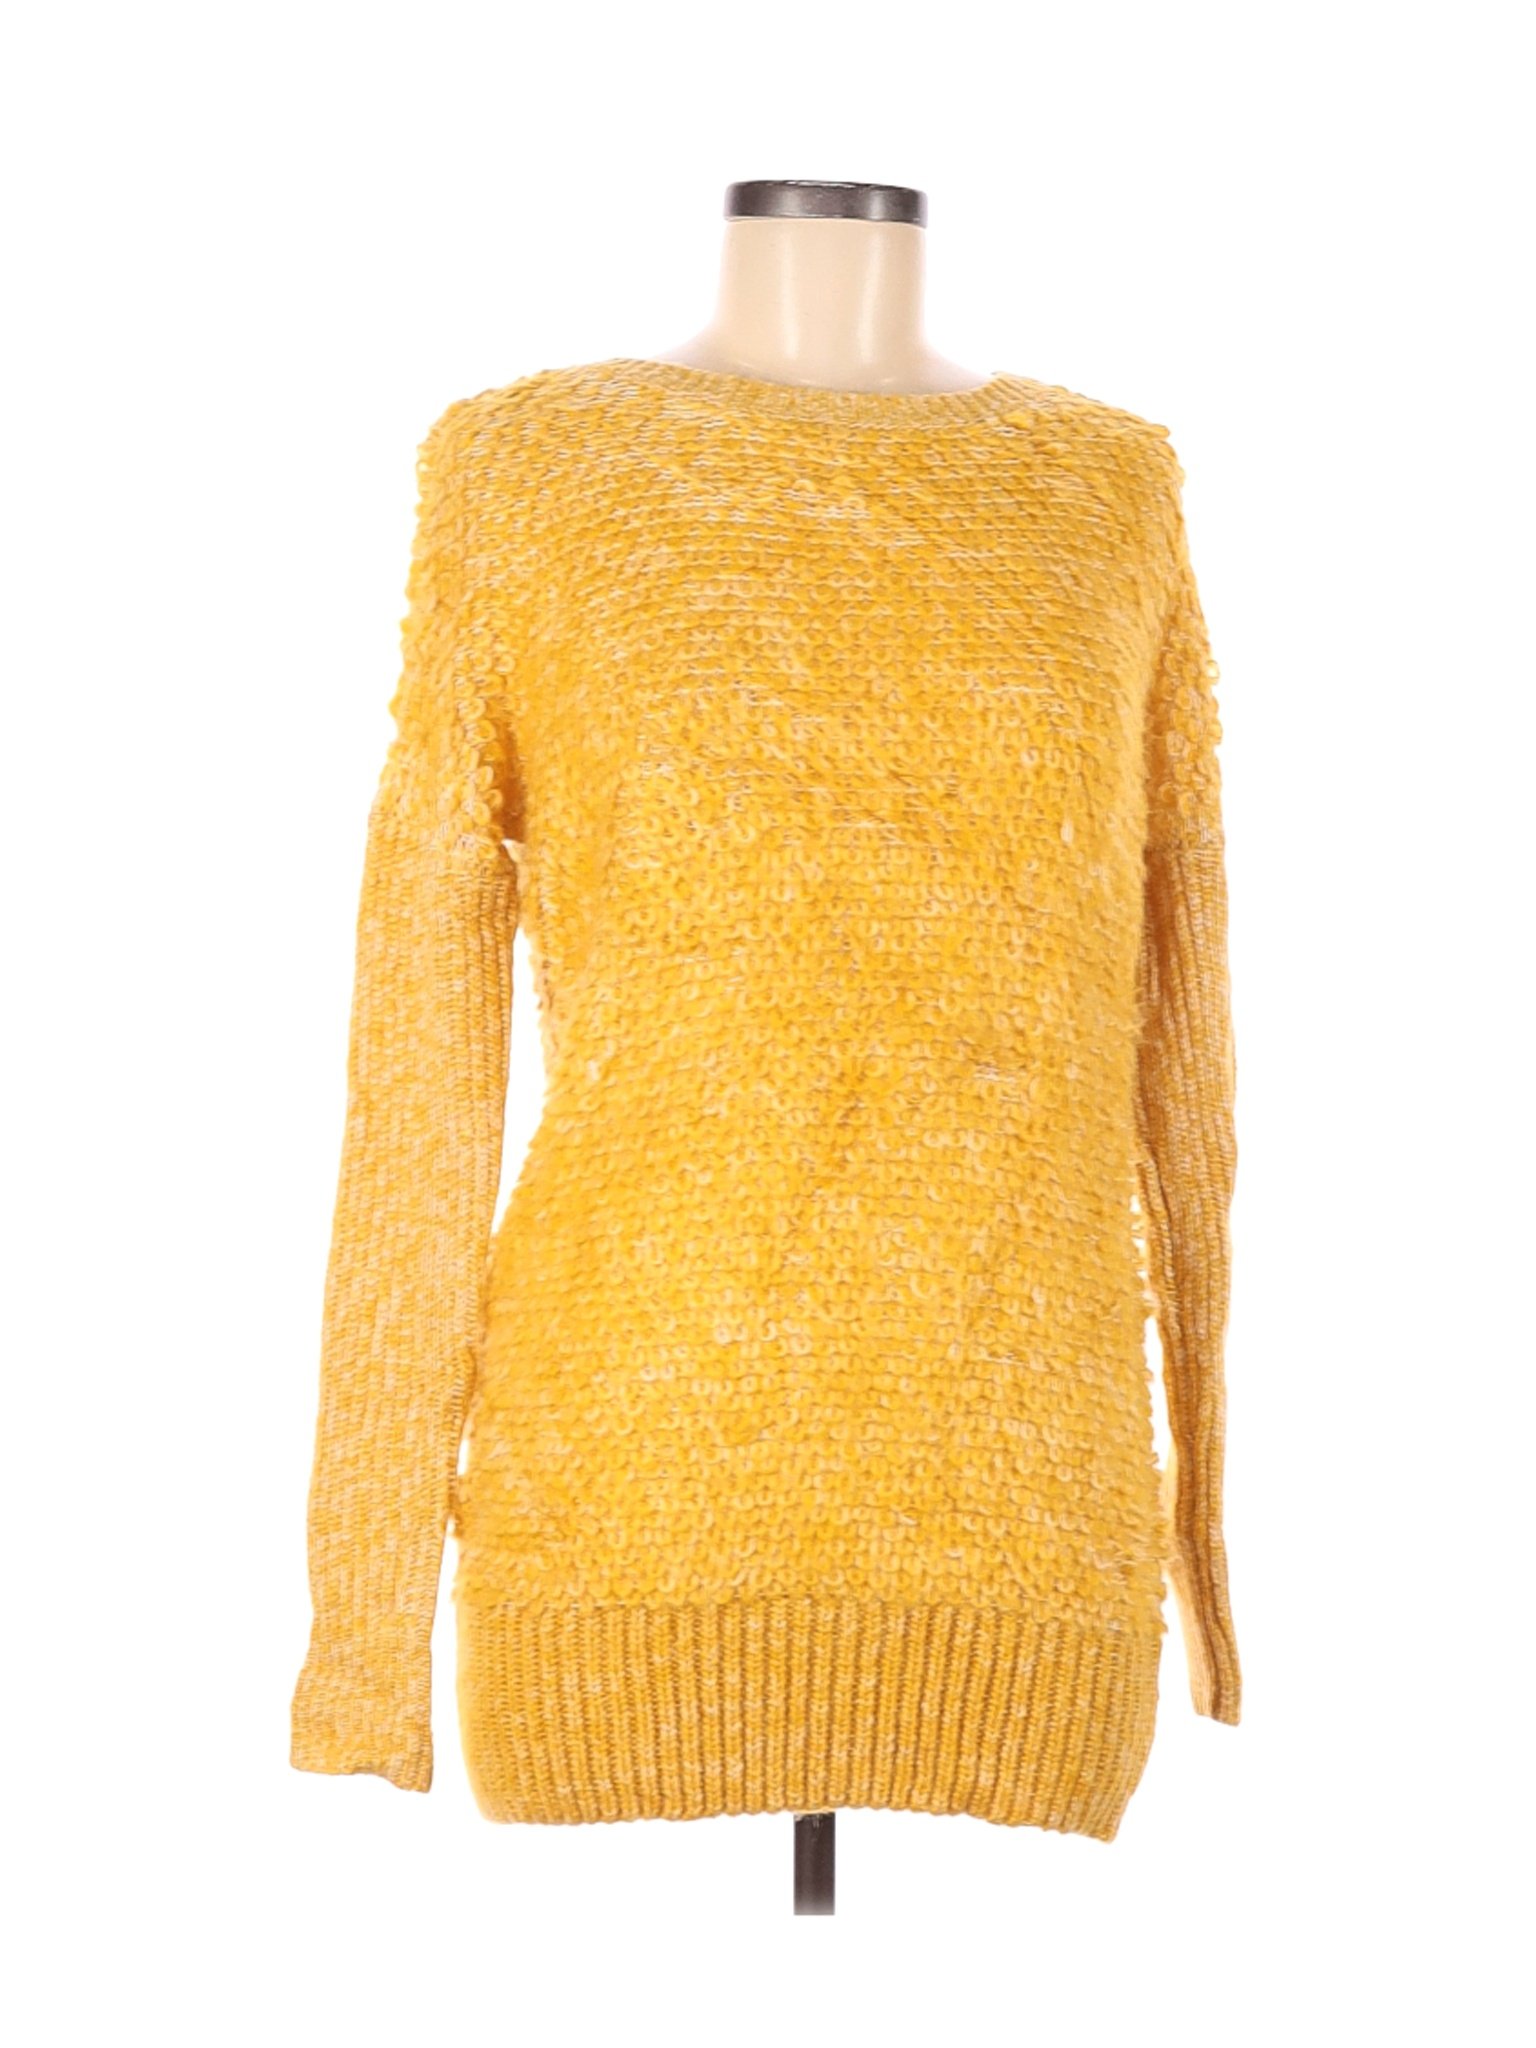 NWT Vero Moda Women Yellow Pullover Sweater S | eBay